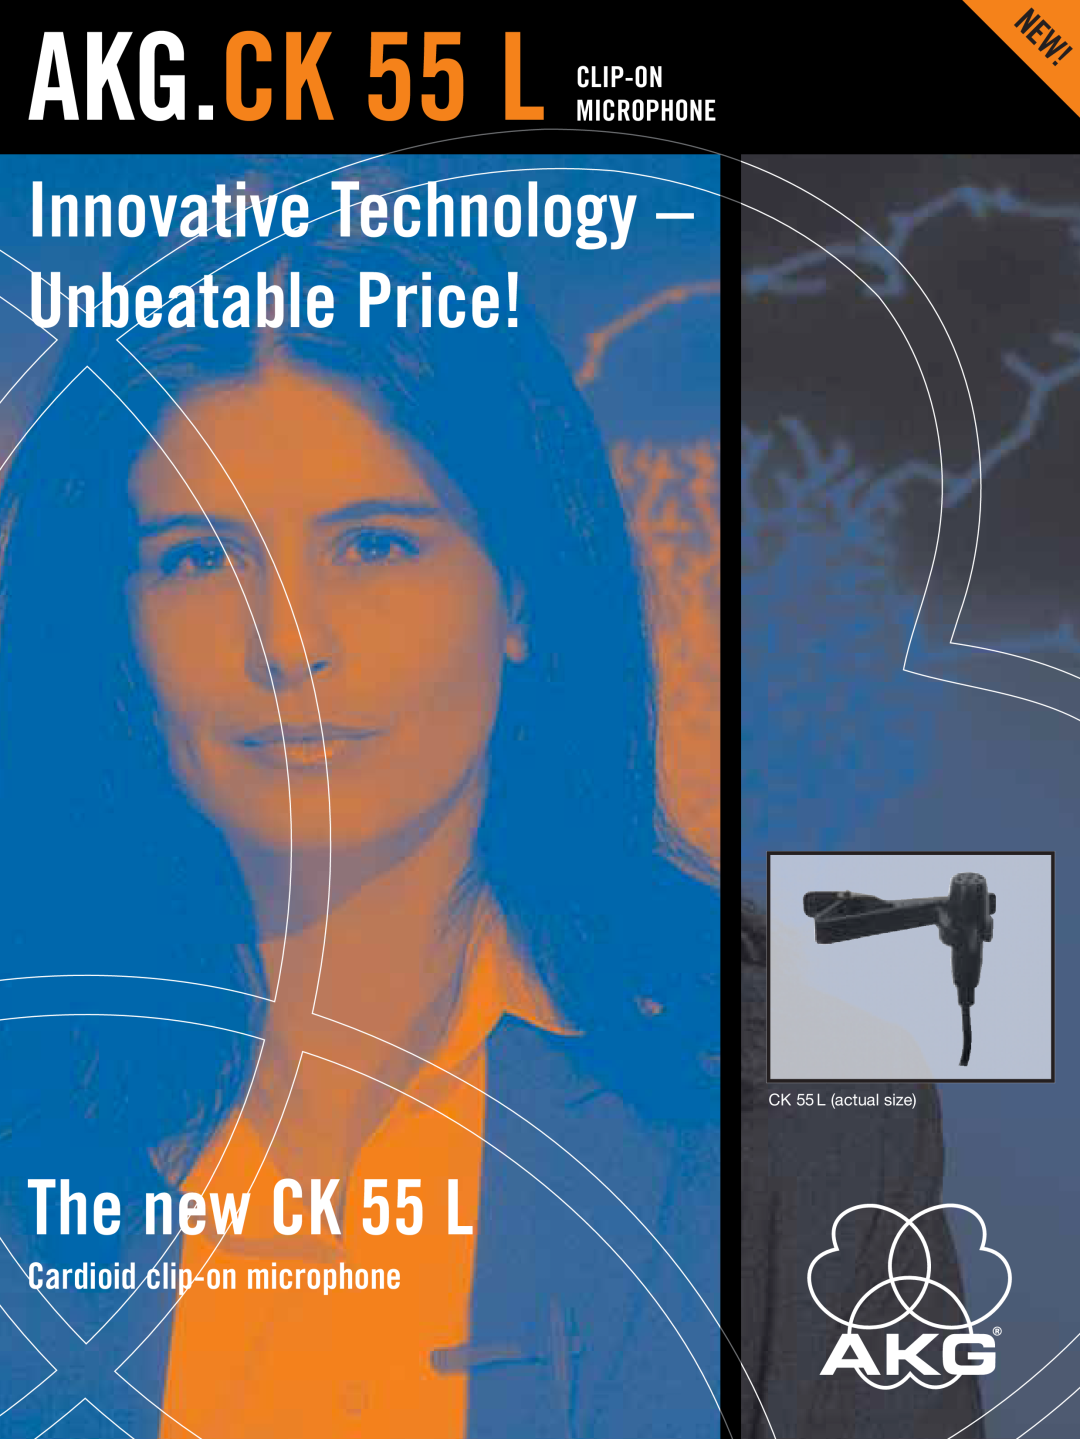 AKG Acoustics CK55L manual Microphone, AKG.CK 55 L CLIP-ON, Innovative Technology Unbeatable Price, The new CK 55 L 